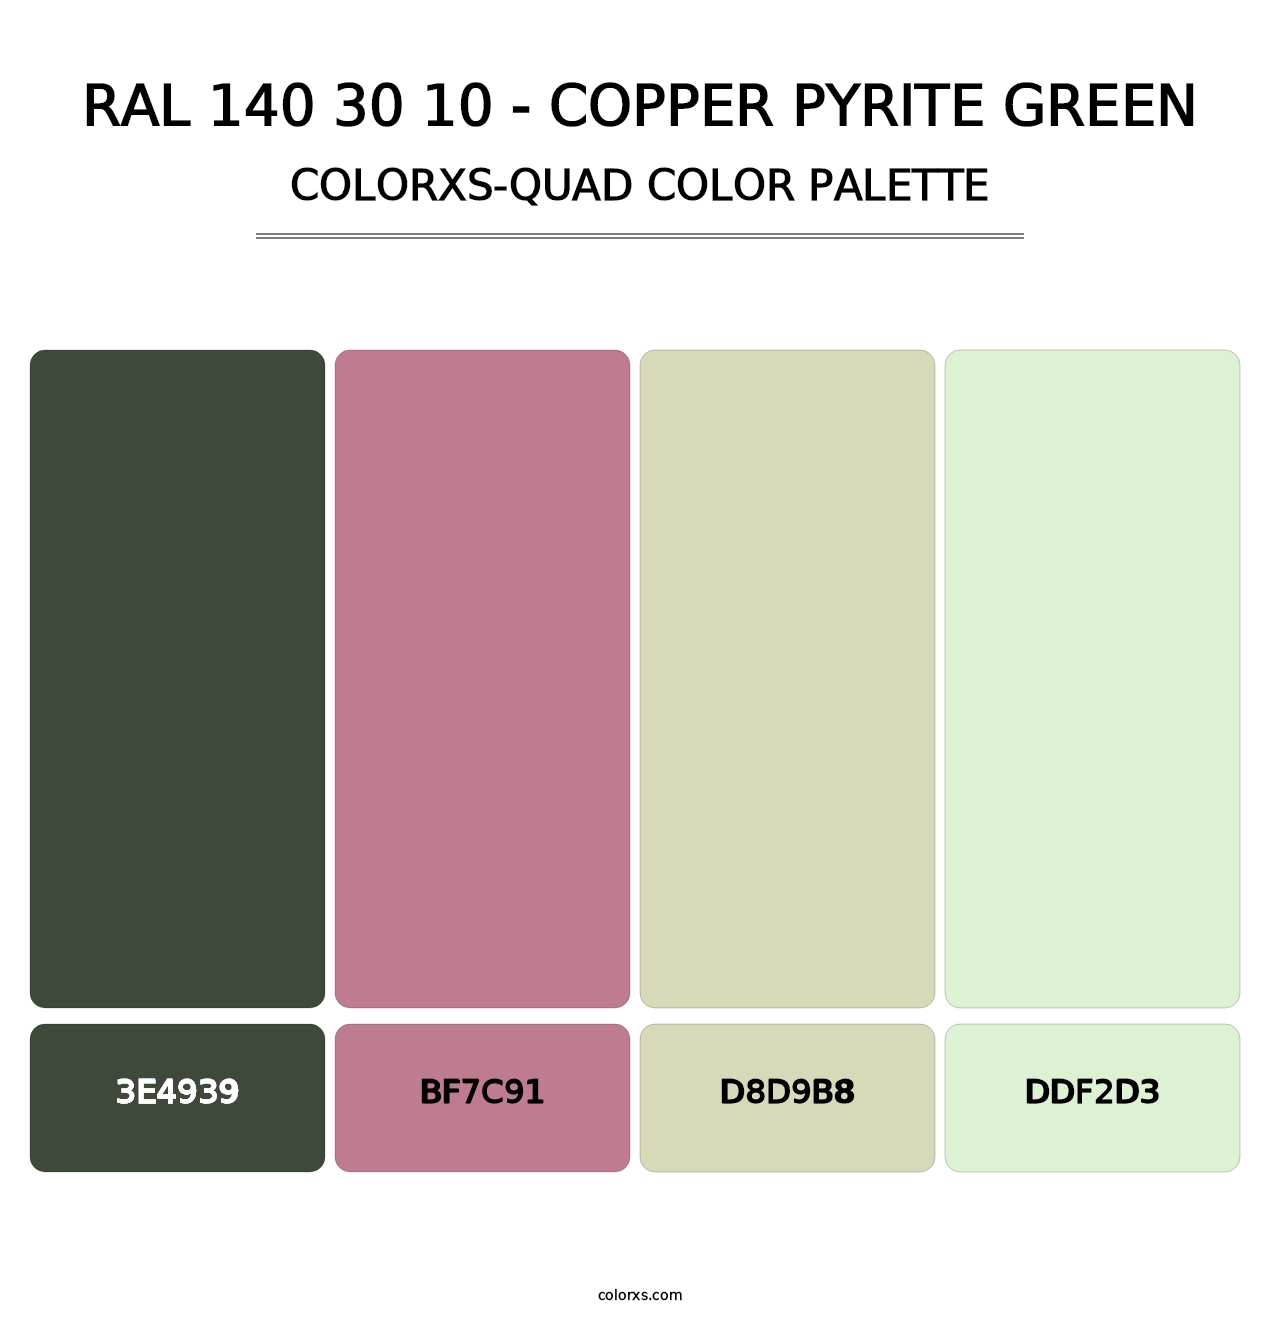 RAL 140 30 10 - Copper Pyrite Green - Colorxs Quad Palette